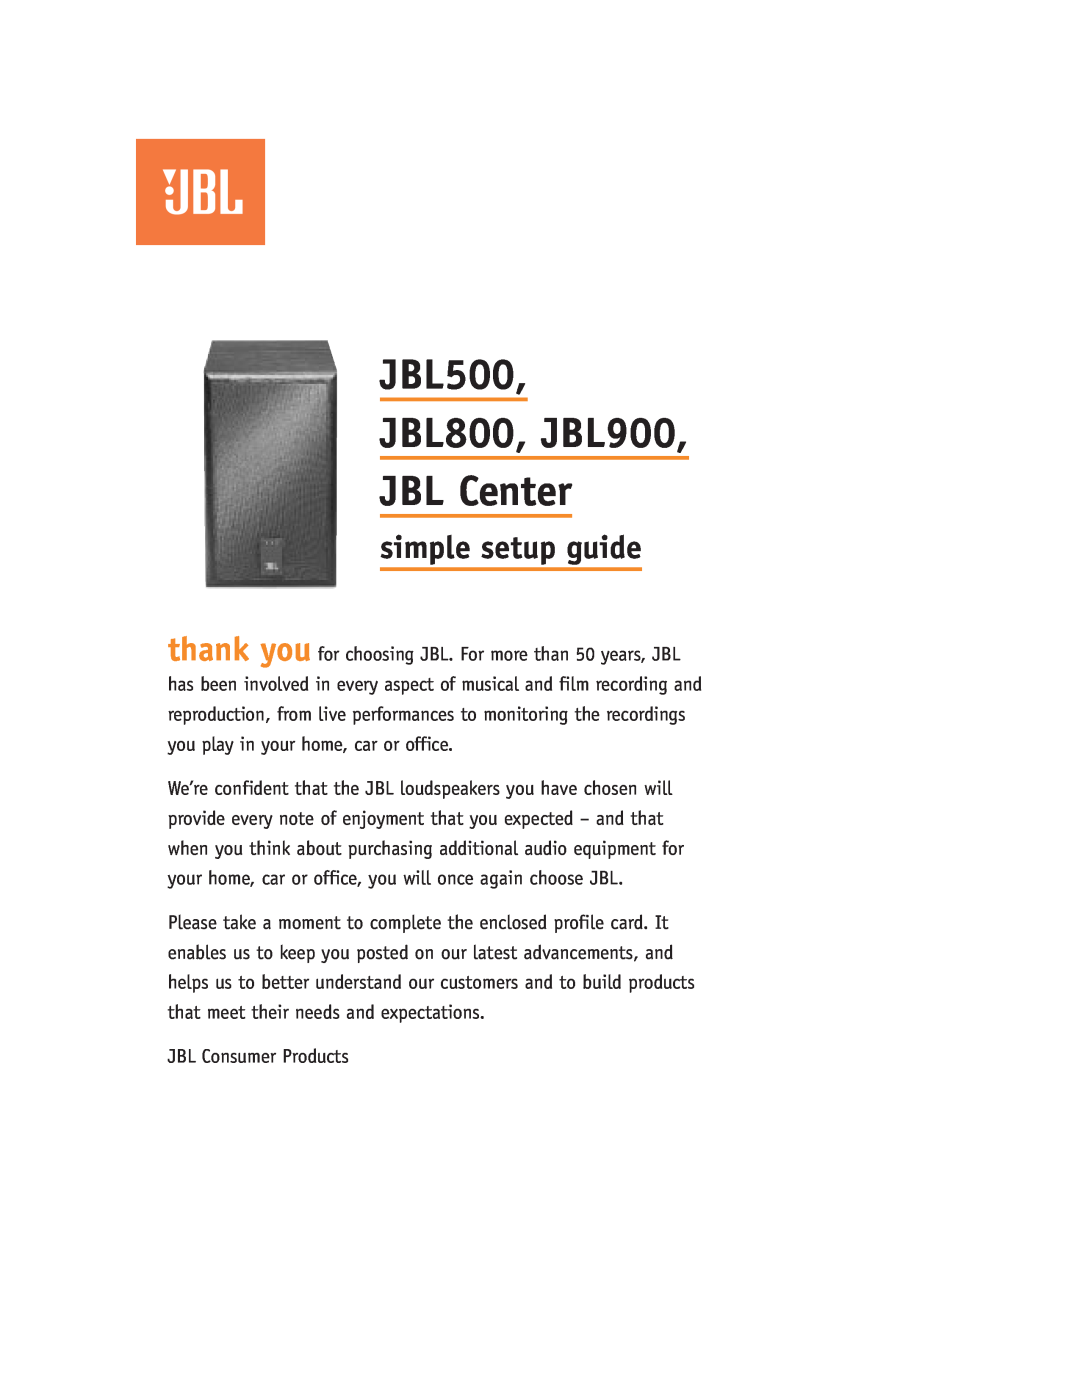 JBL setup guide JBL500 JBL800, JBL900 JBL Center, simple setup guide 